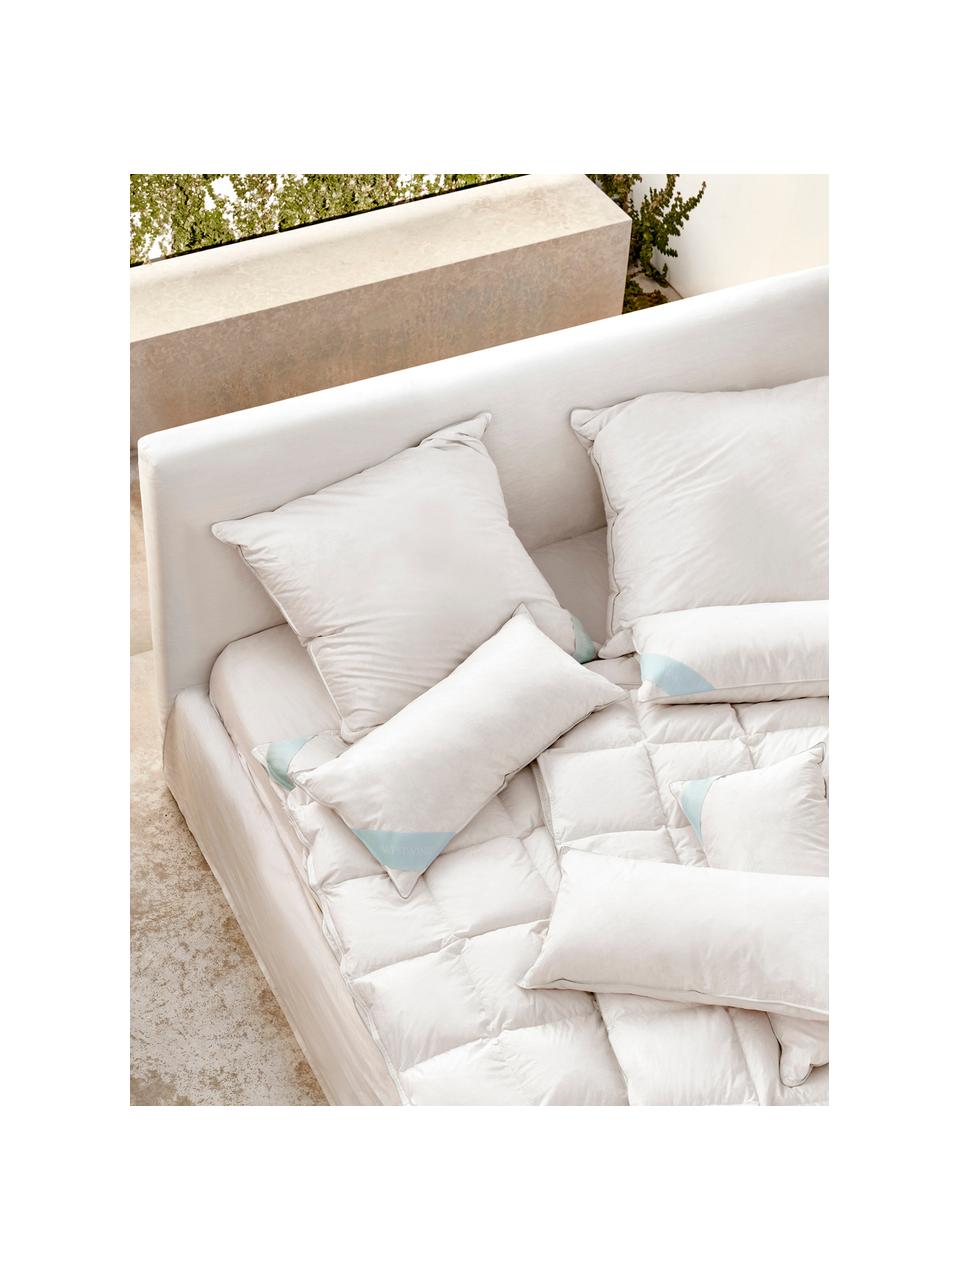 Feder-Kopfkissen Comfort, fest, Hülle: 100% Baumwolle, Mako-Köpe, Weiß, B 80 x L 80 cm